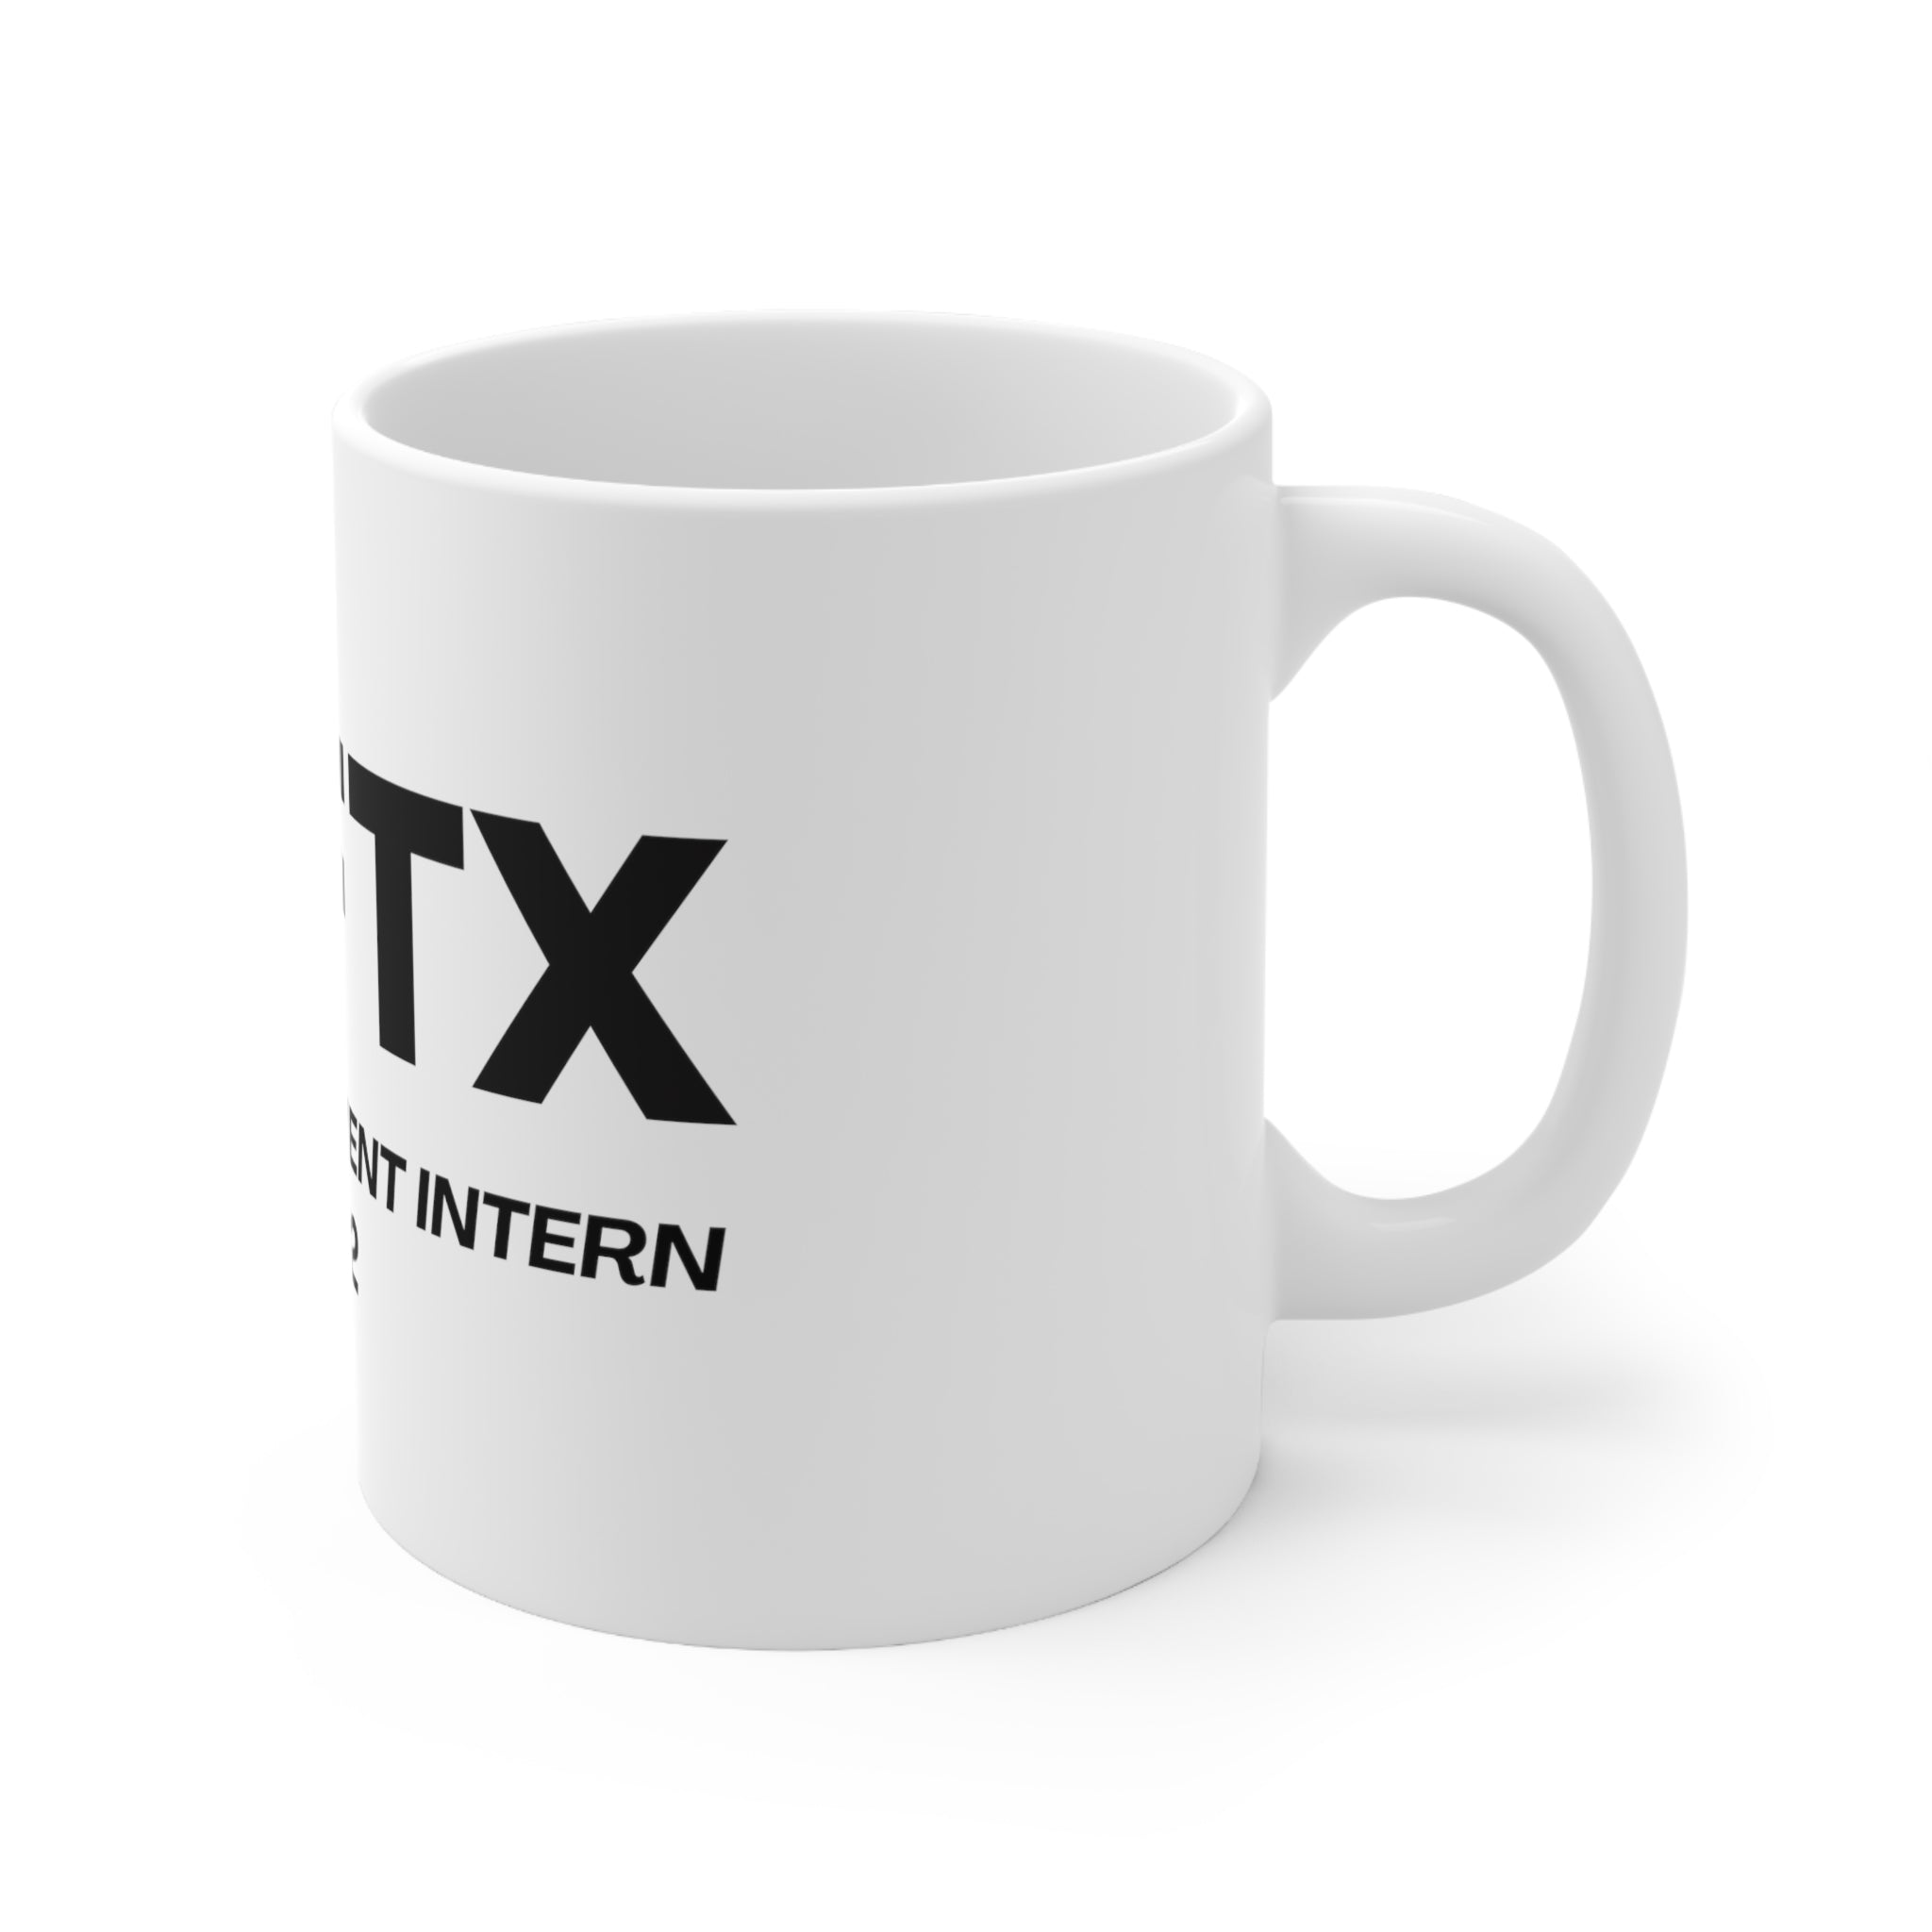 FTX Risk Management Intern 2002 - Ceramic Mug 11oz